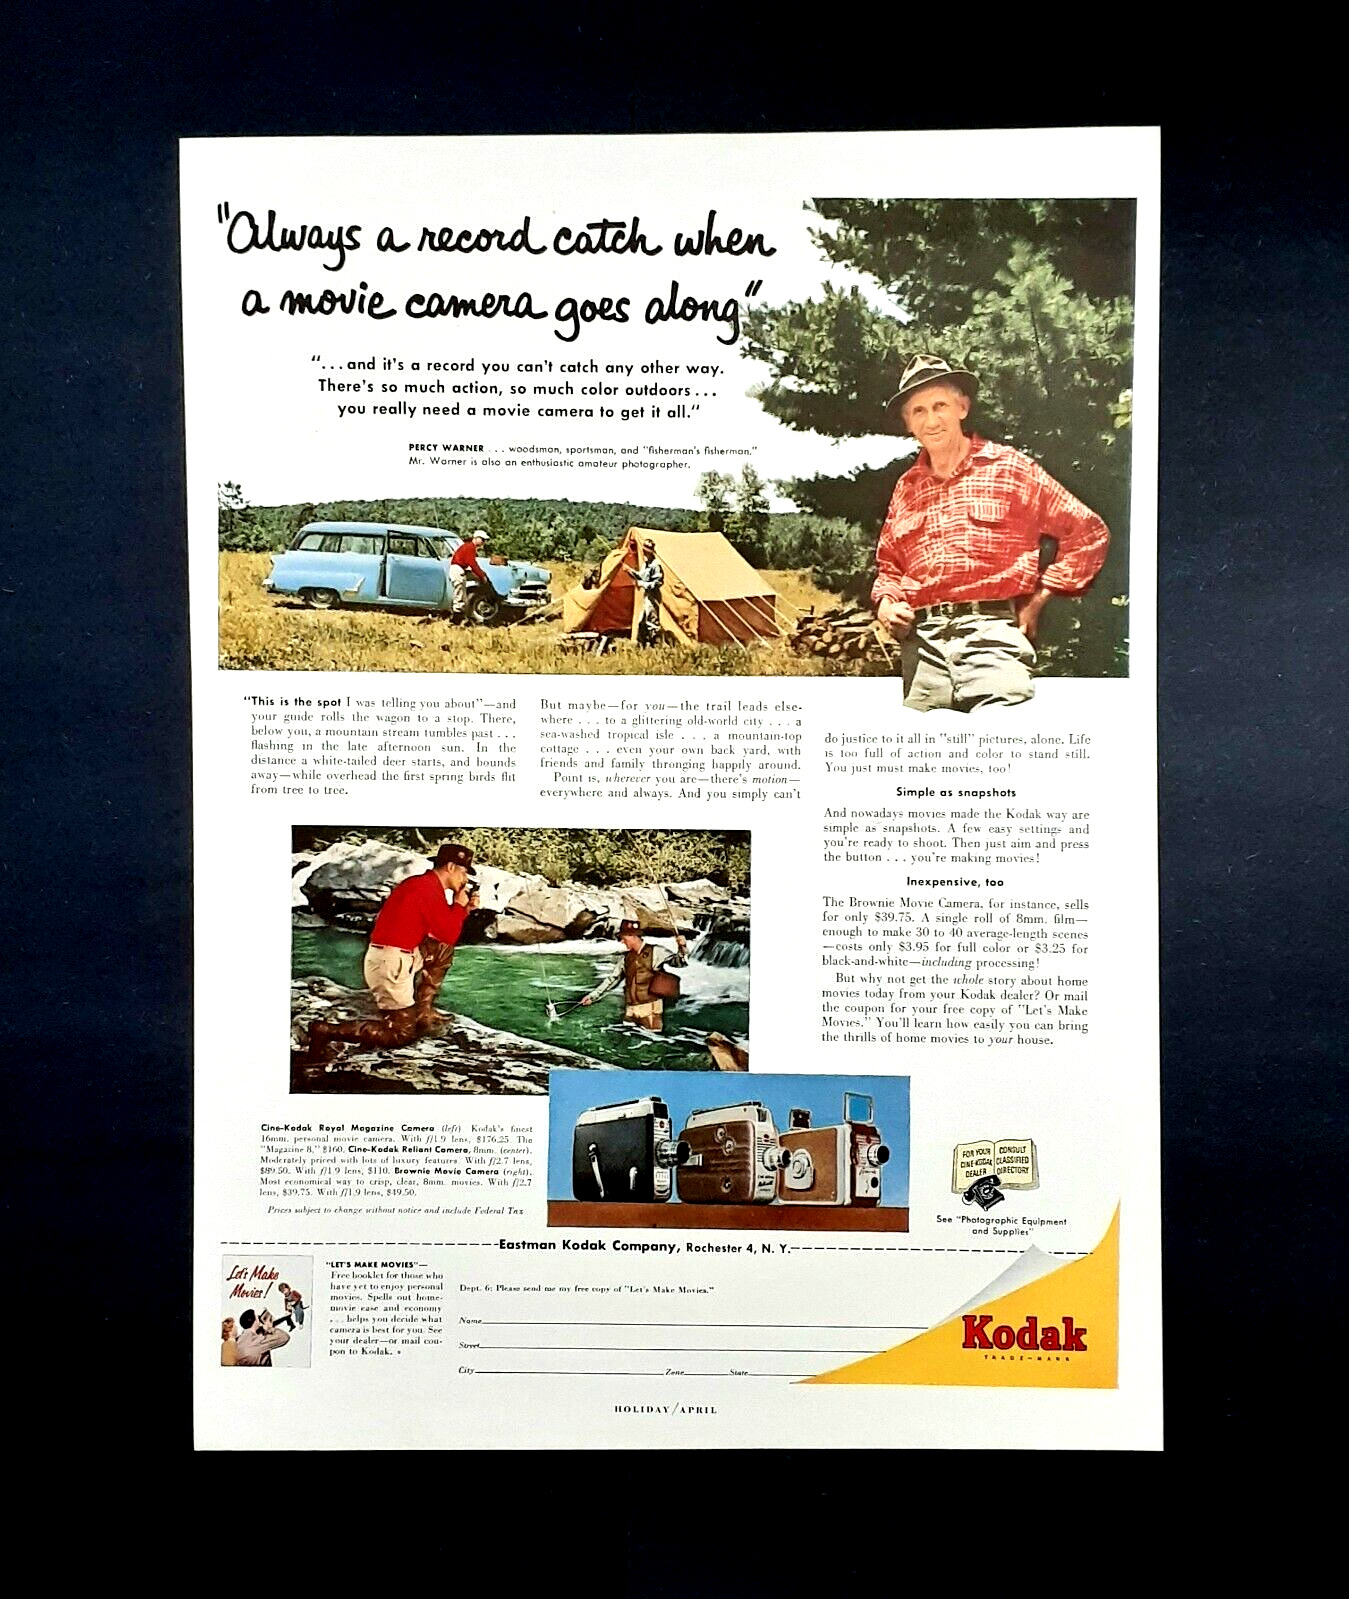 Kodak Brownie camera ad vintage 1954 Reliant Royal movie camera advertisement